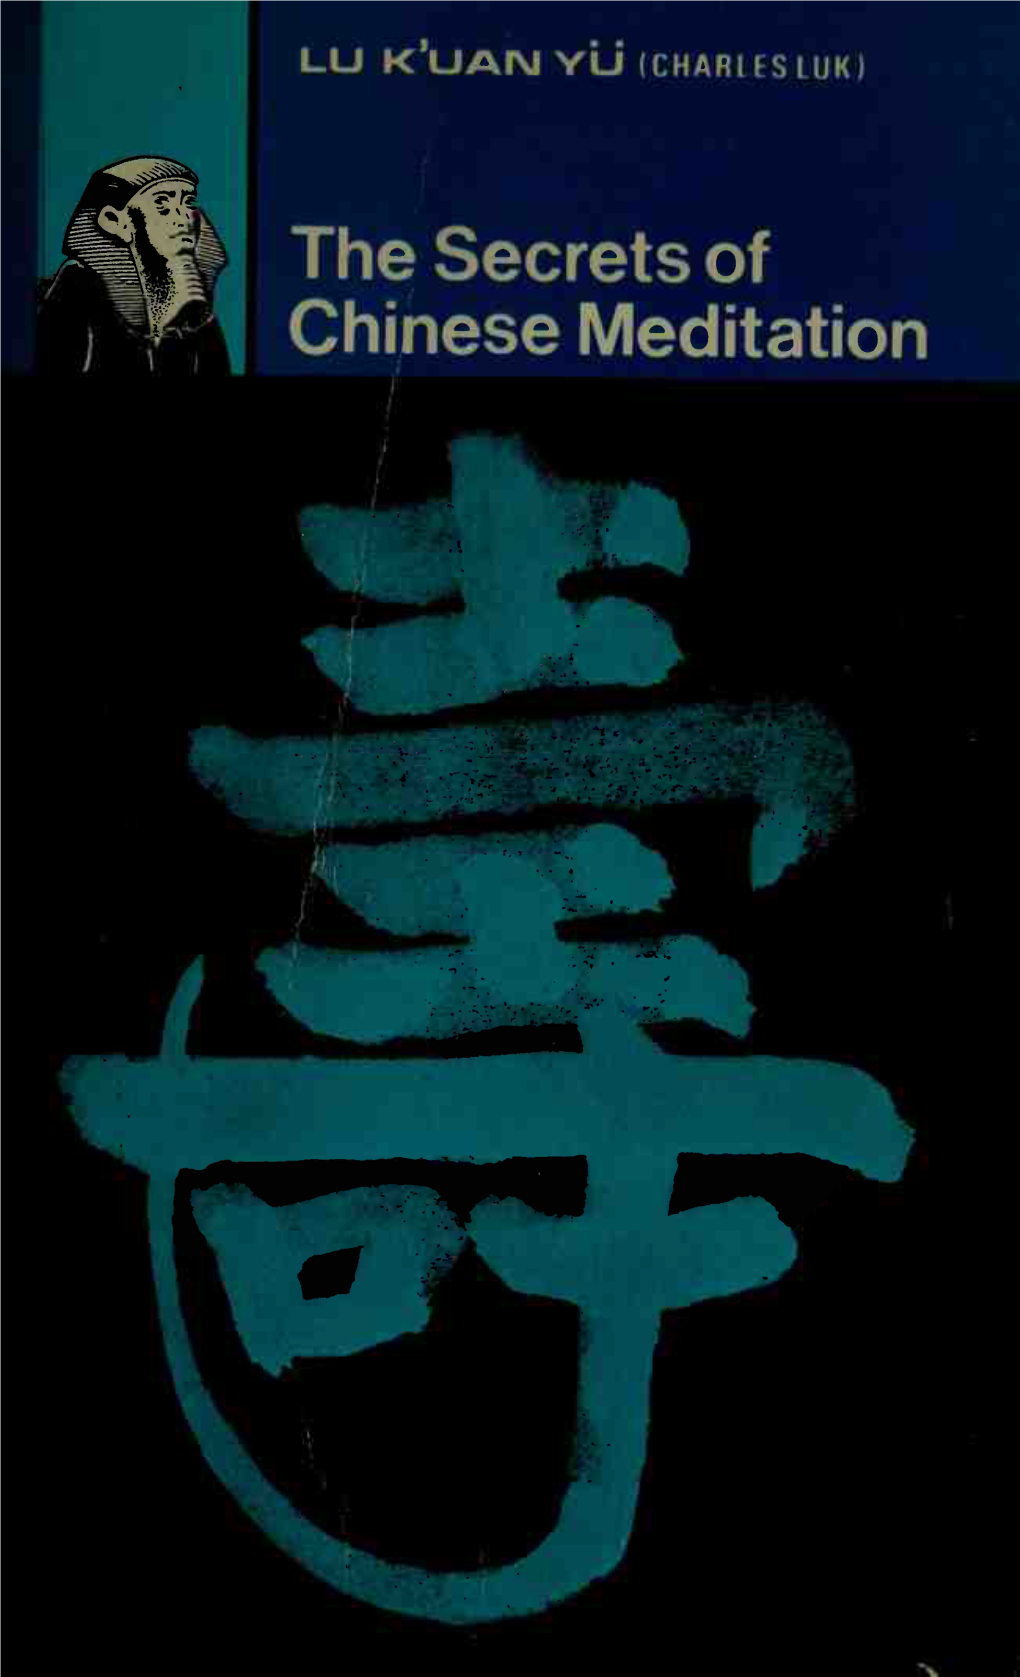 The Secrets of Chinese Meditation the Secrets of Chinese Meditation : Self BL1478.6 .L8 1972 BL 13209